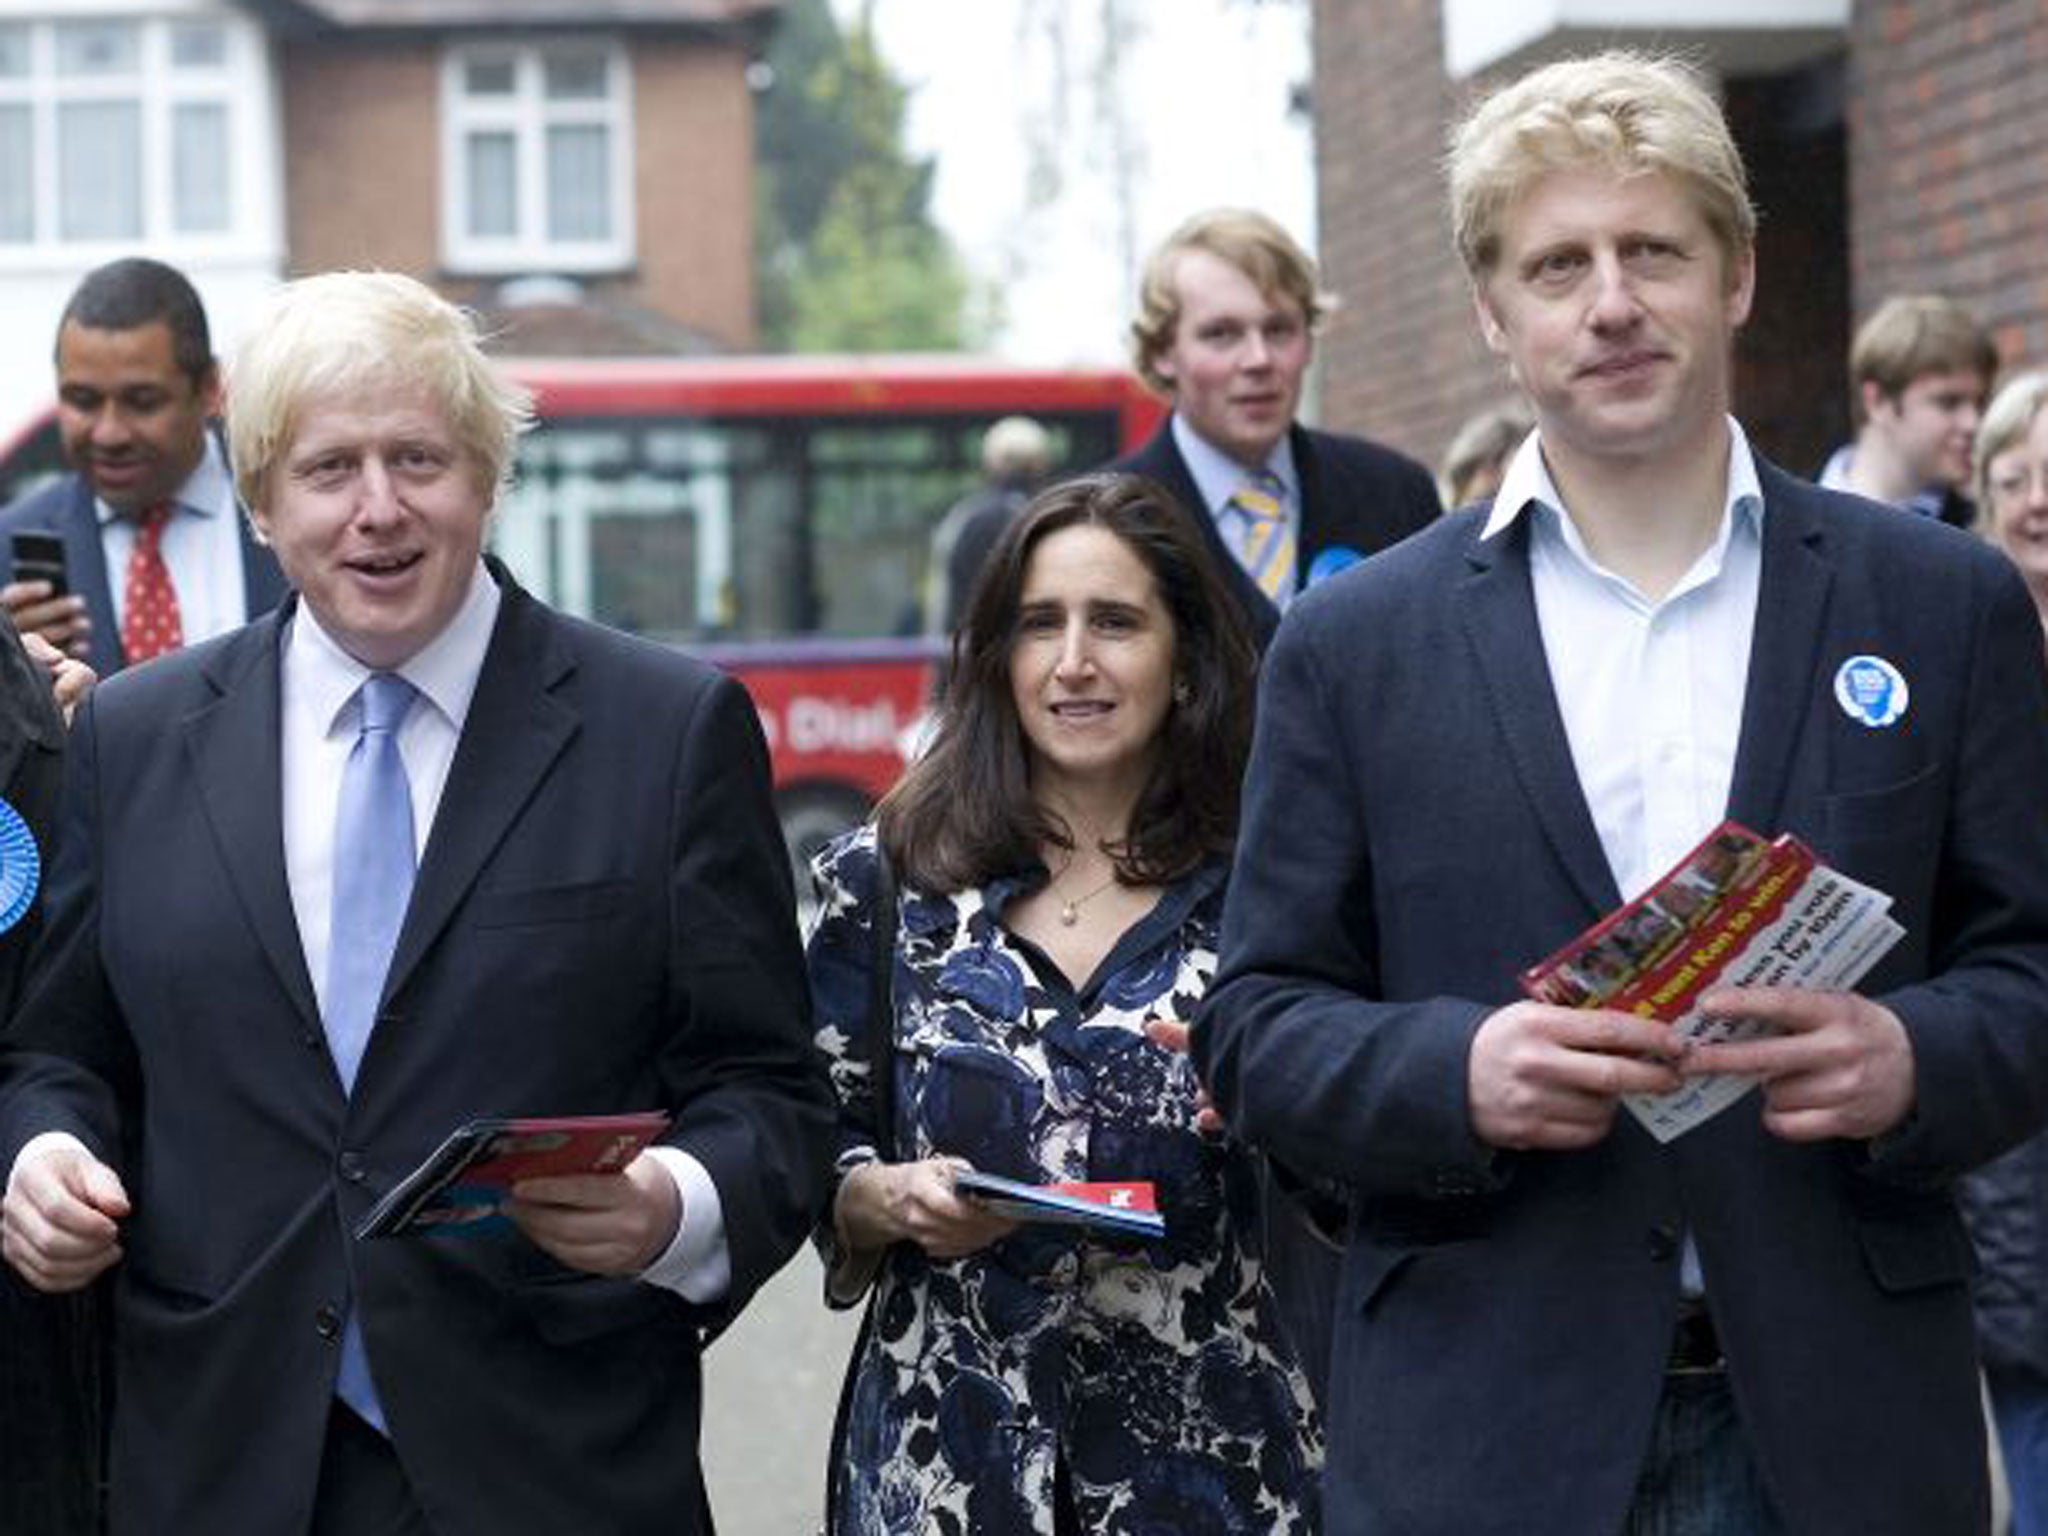 London Mayor Boris Johnson, with his wife Marina Wheeler and brother Joe, campaigning in Orpington